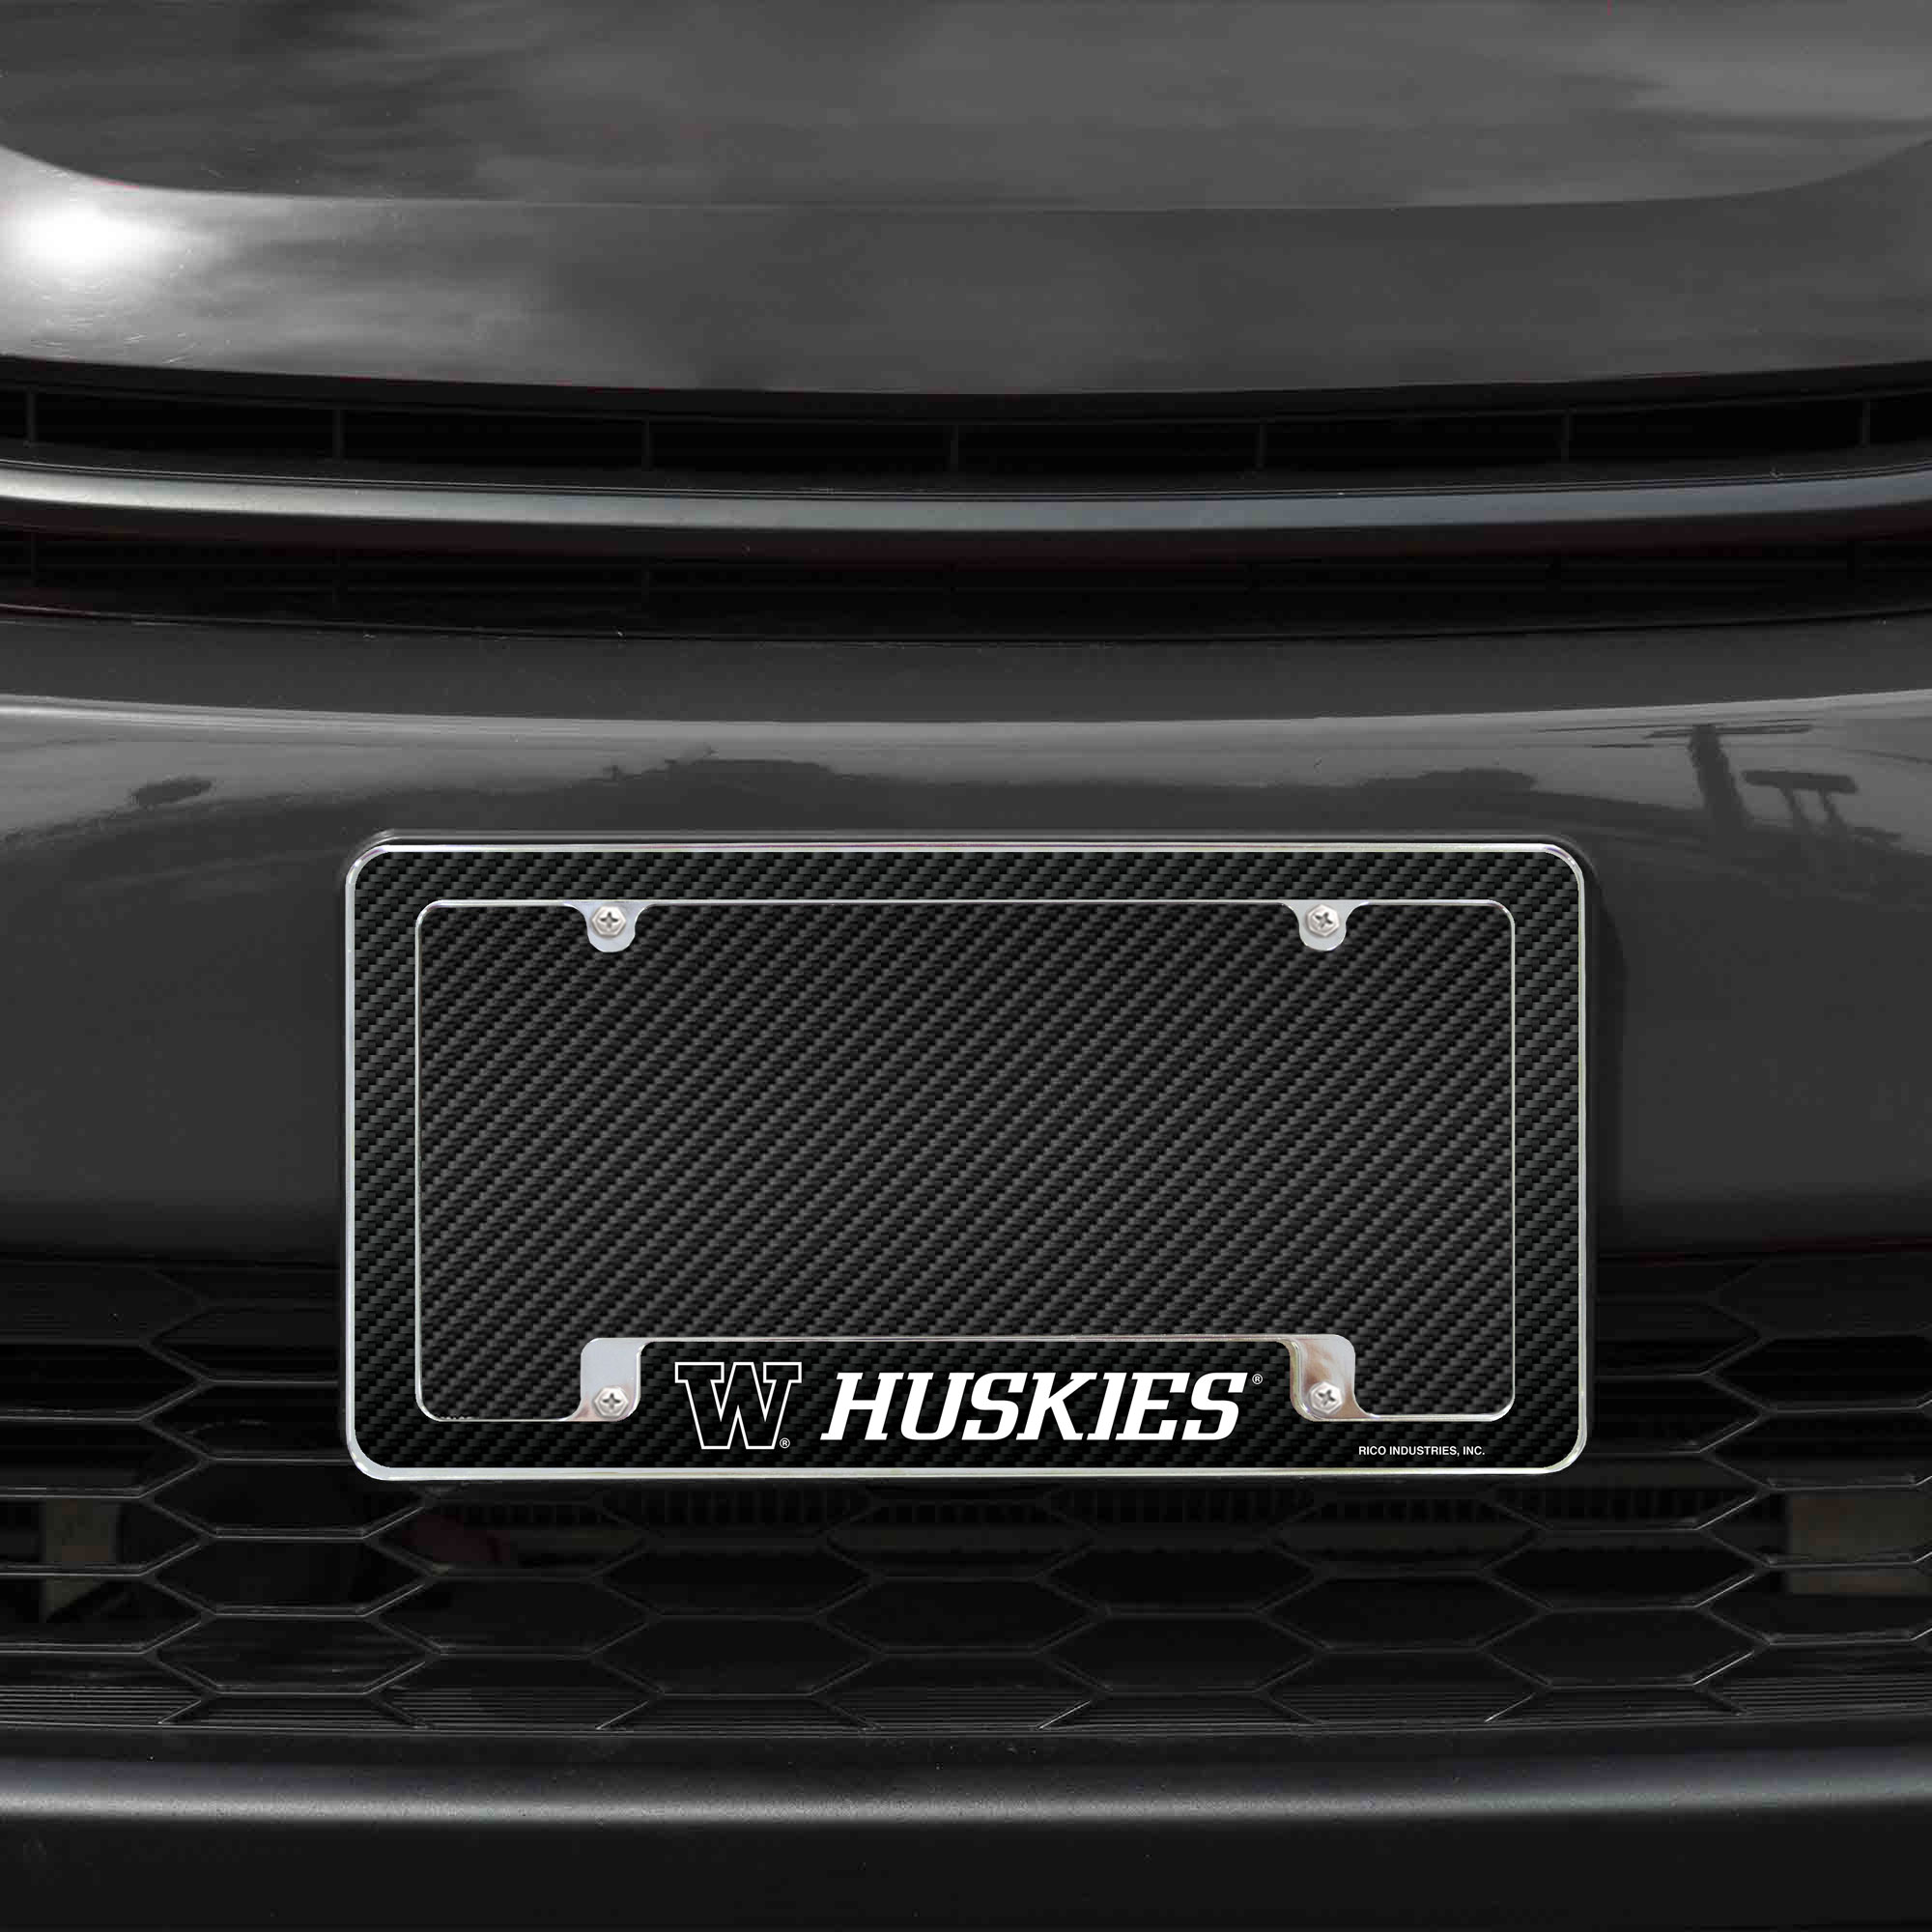 Washington NCAA Huskies Chrome Metal License Plate Frame with Carbon Fiber Design - image 2 of 10